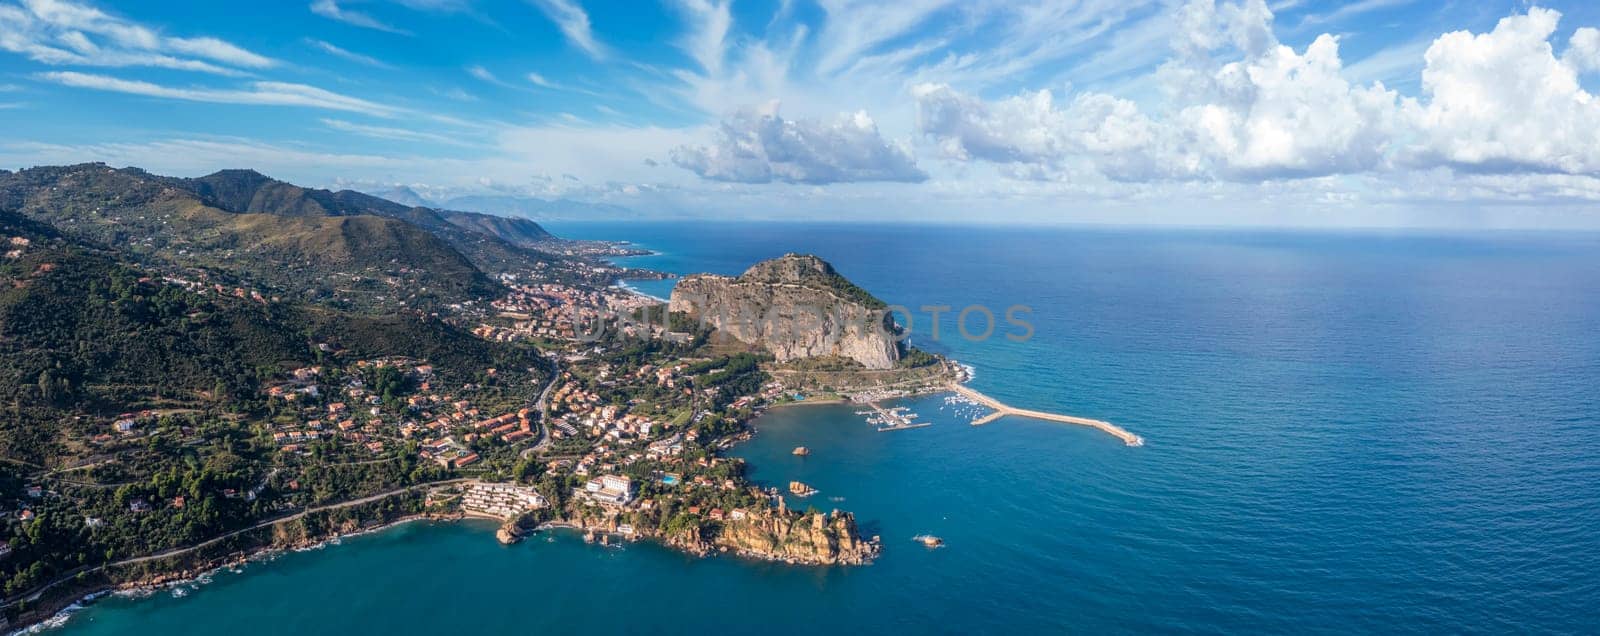 Aerial view of a coastline near Cefalu medieval village of Sicily island, Italy by EdVal